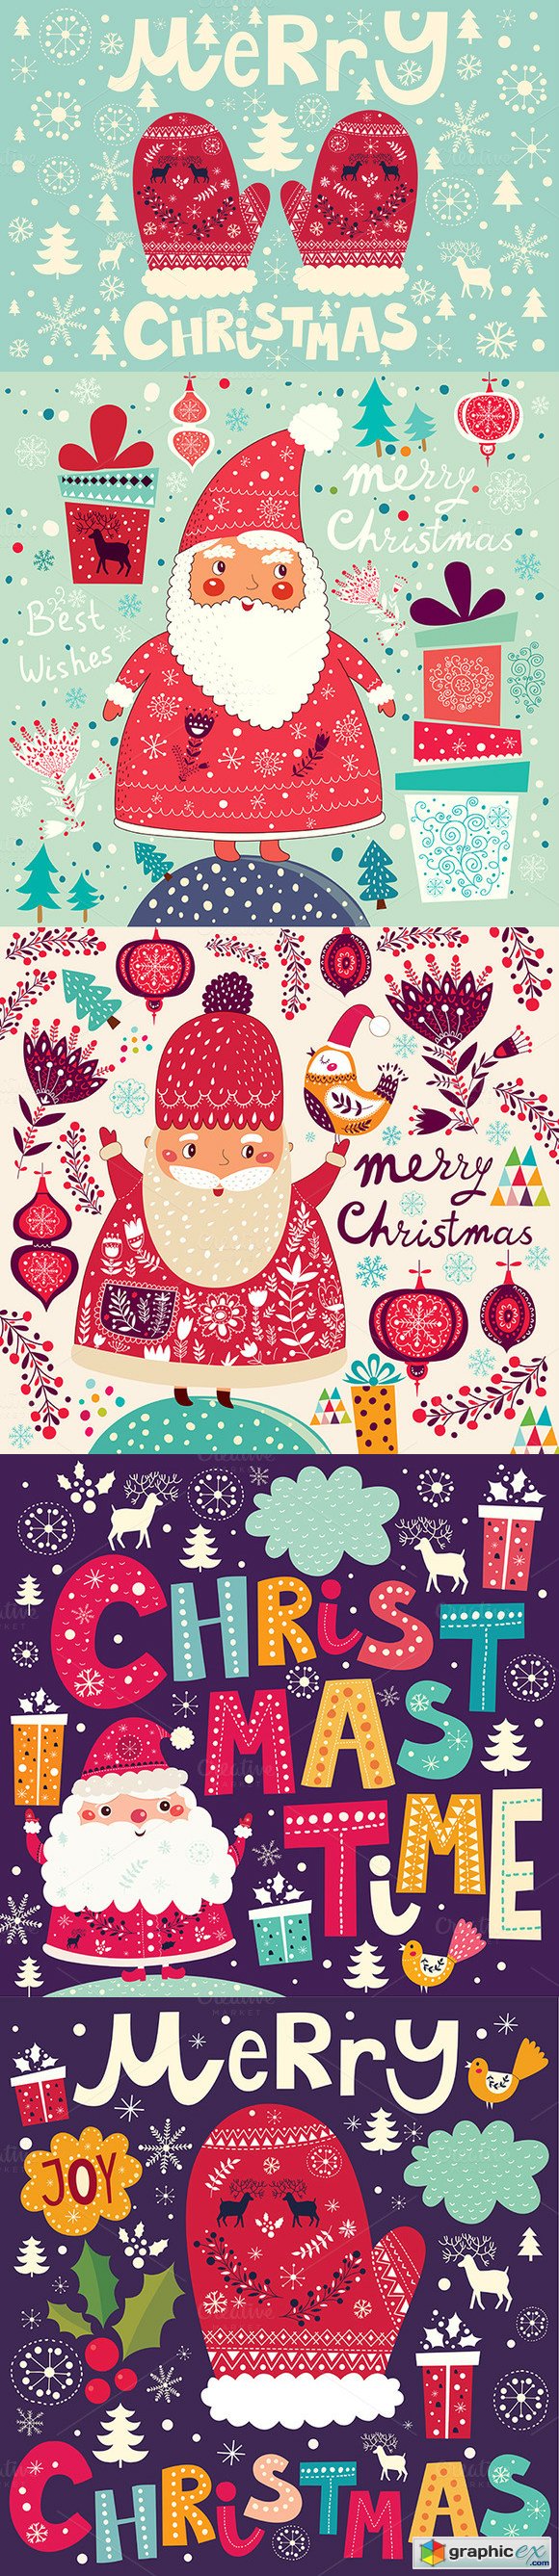 Bundle of Christmas illustrations